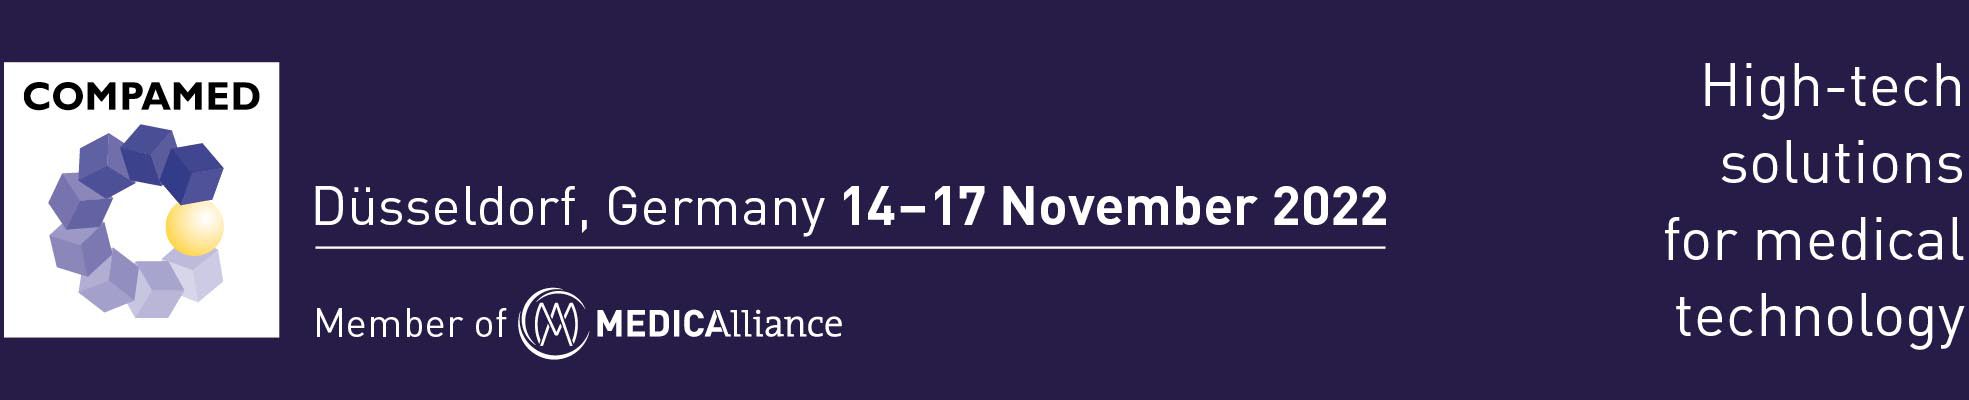 14.-17. November 2022 - COMPAMED, Düsseldorf